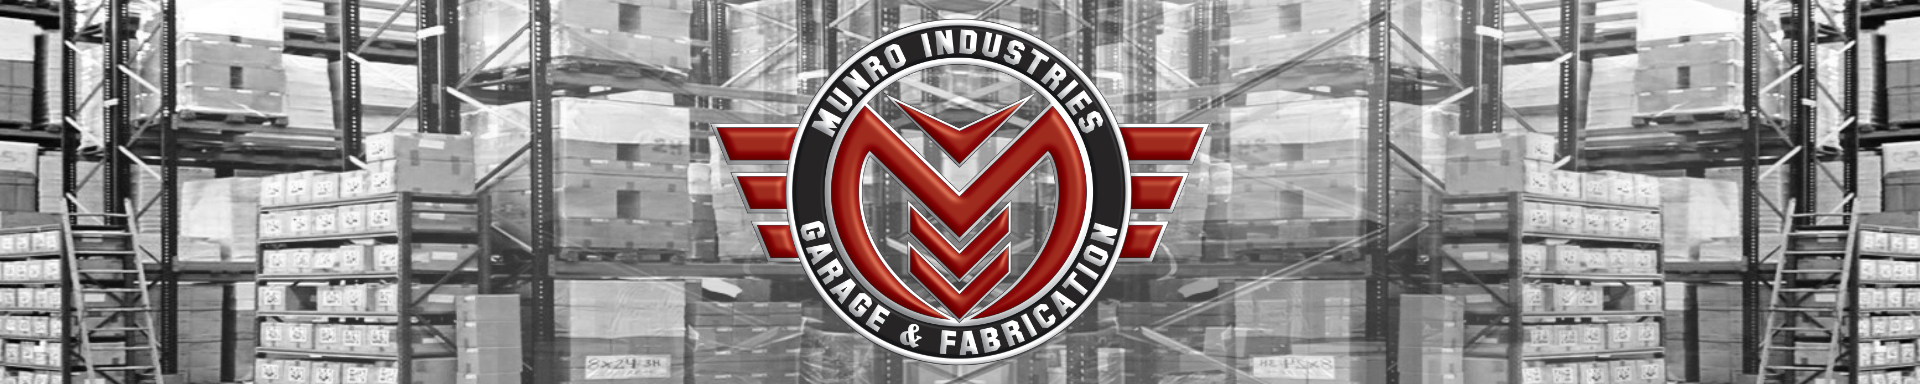 All Products | GarageAndFab.com | Munro Industries gf-10010300